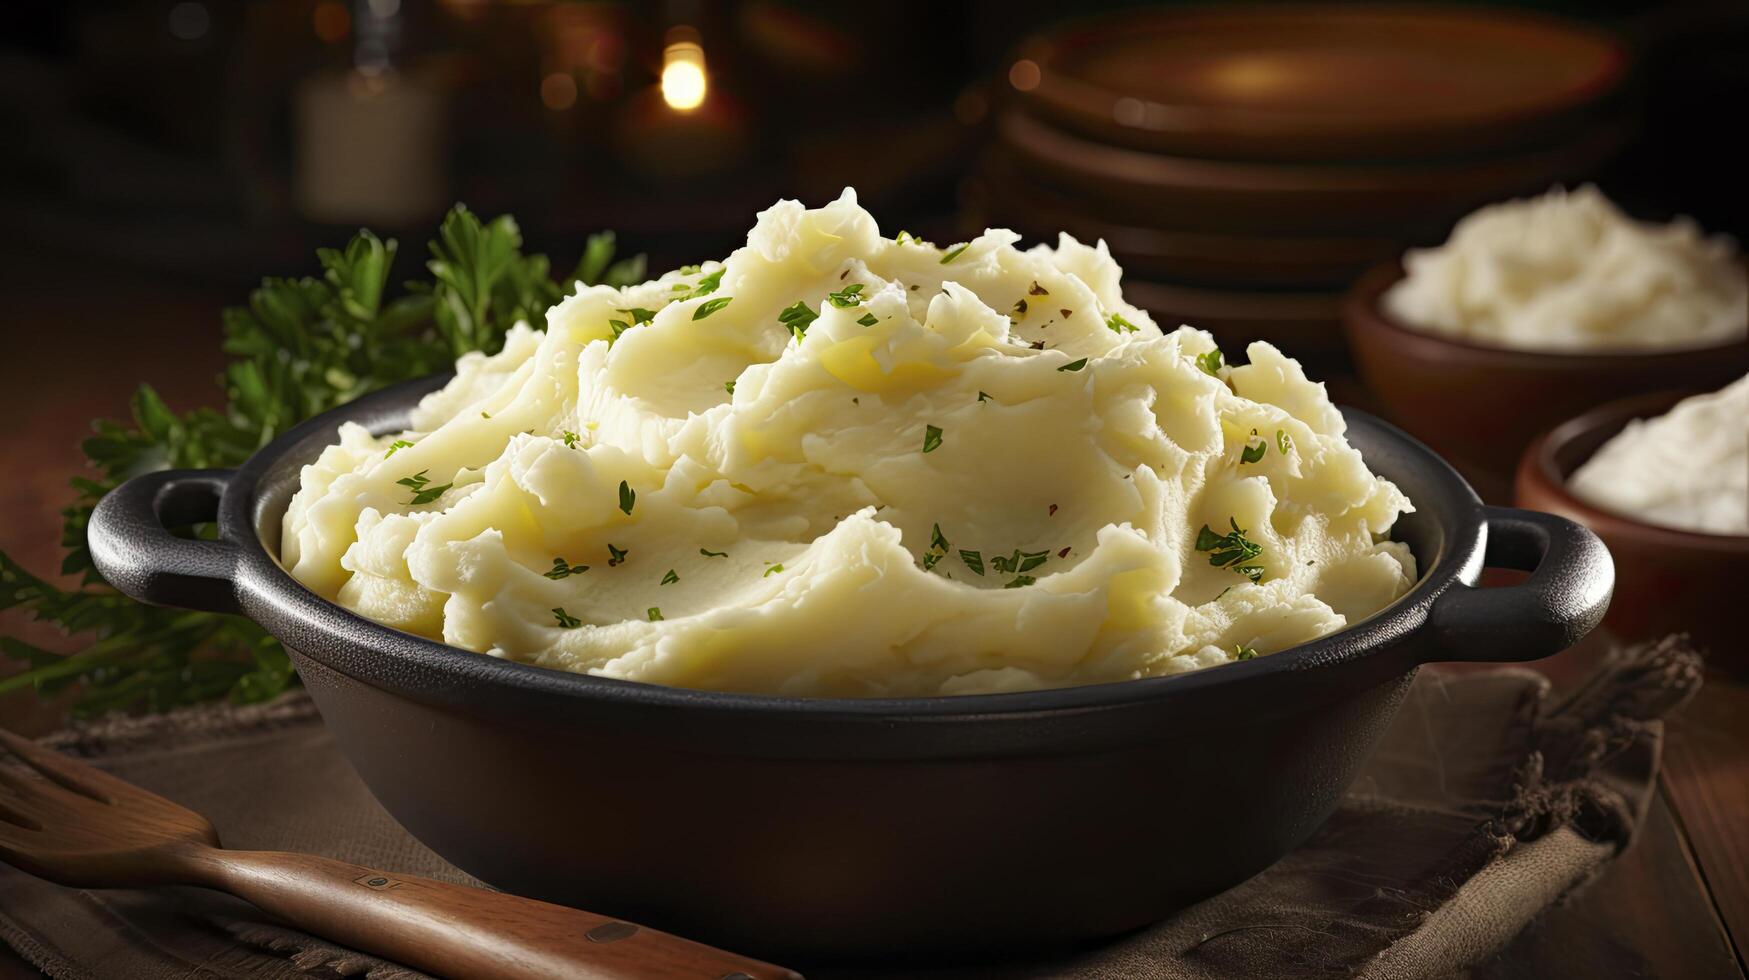 ai generado patata ensalada servido en mesa, dieta concepto foto